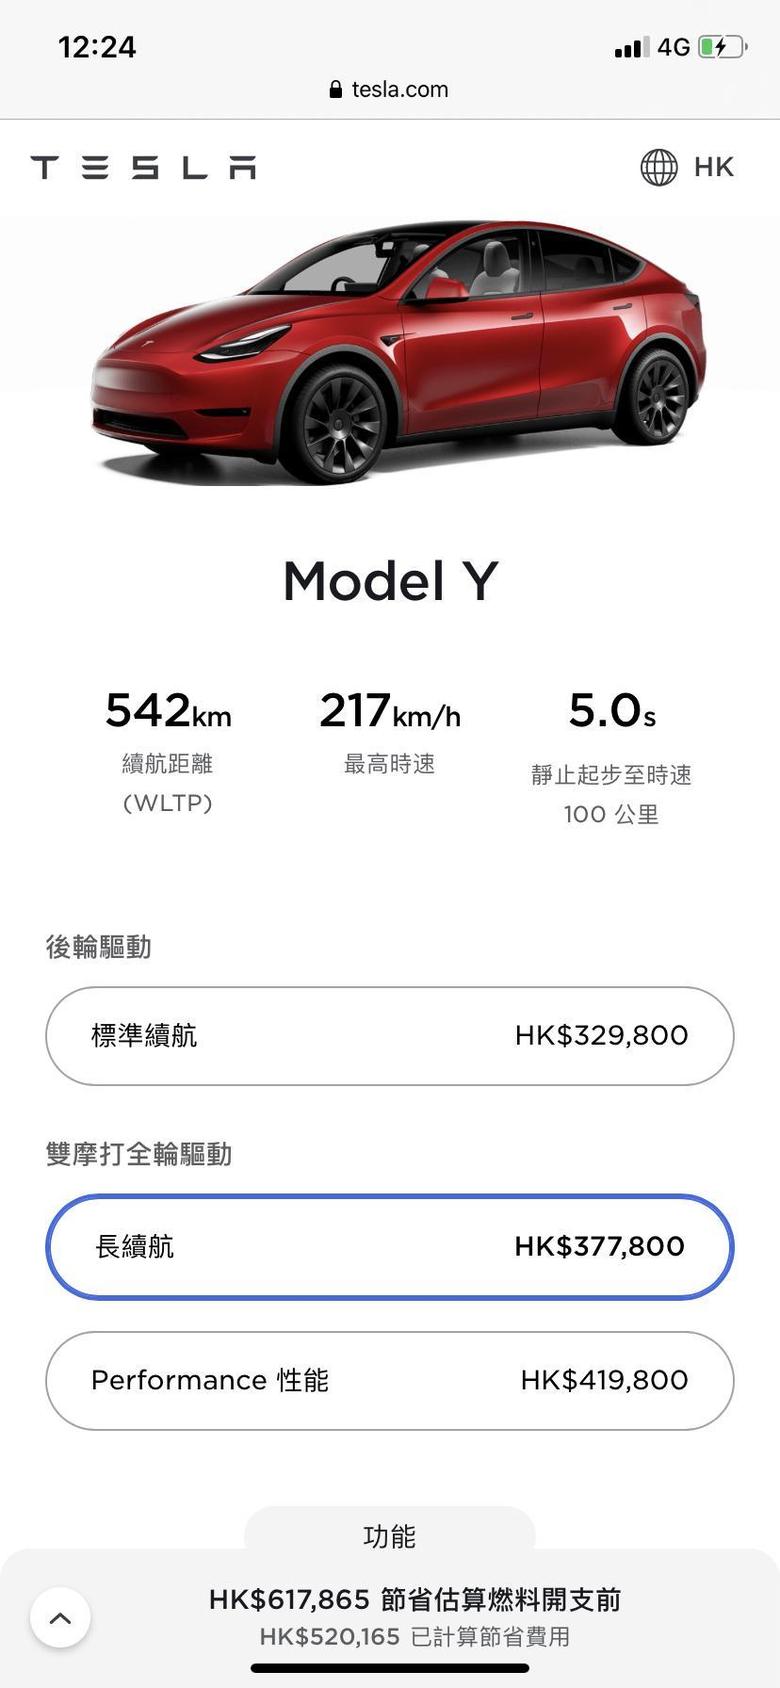 model y 香港的长续航modely在wltp工况下续航达到了542km，不知道是不是使用了四元锂电池，希望中国早点更新，香港标配20寸轮毂，而且白色不加钱，羡慕啊~